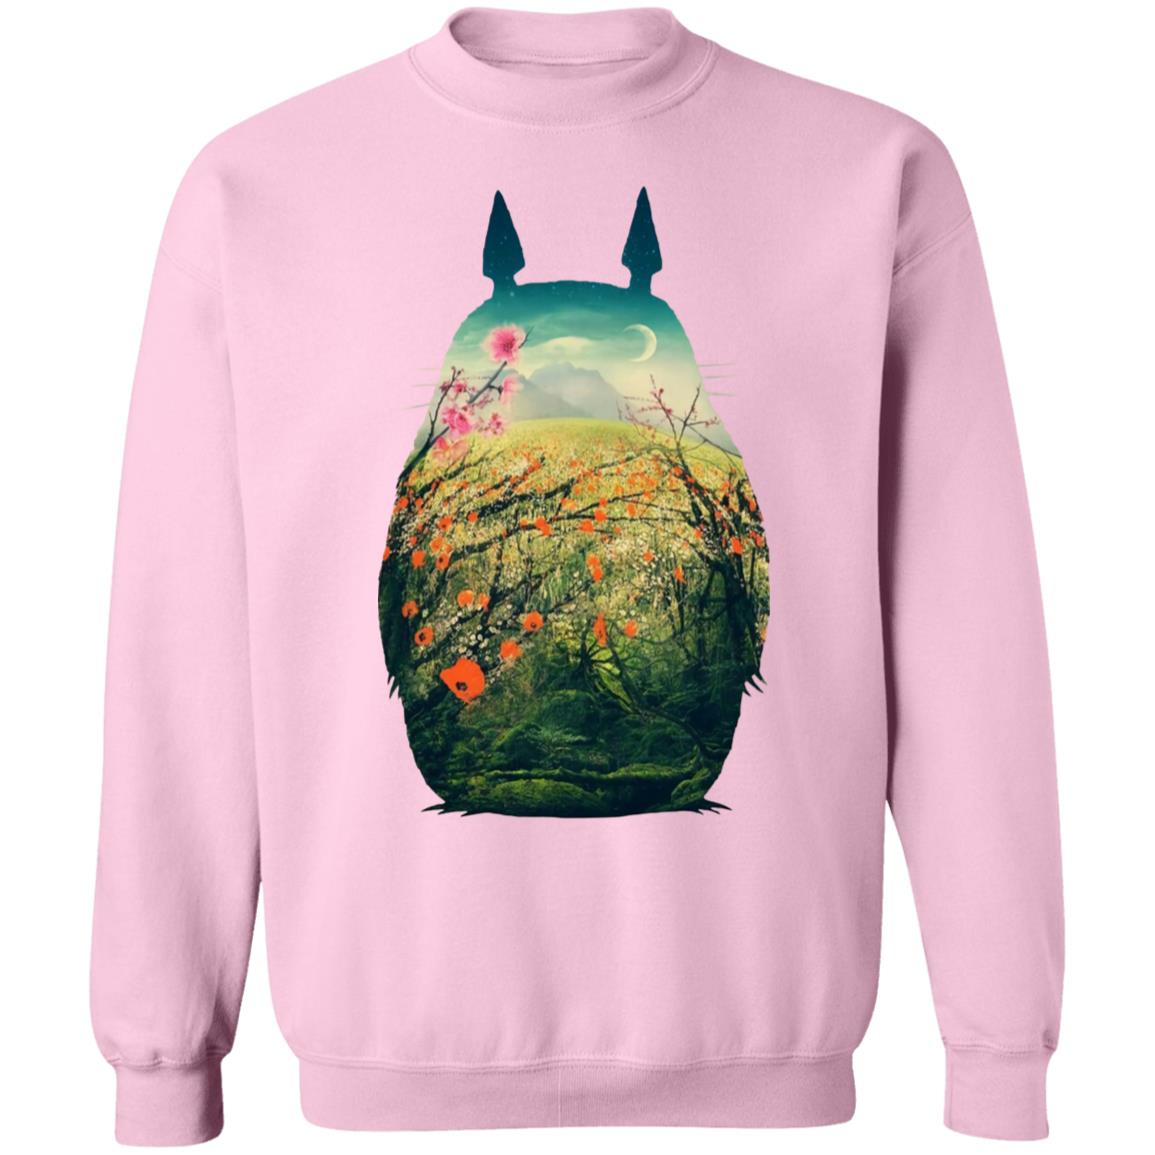 My Neighbor Totoro Colorful Cutout Sweatshirt